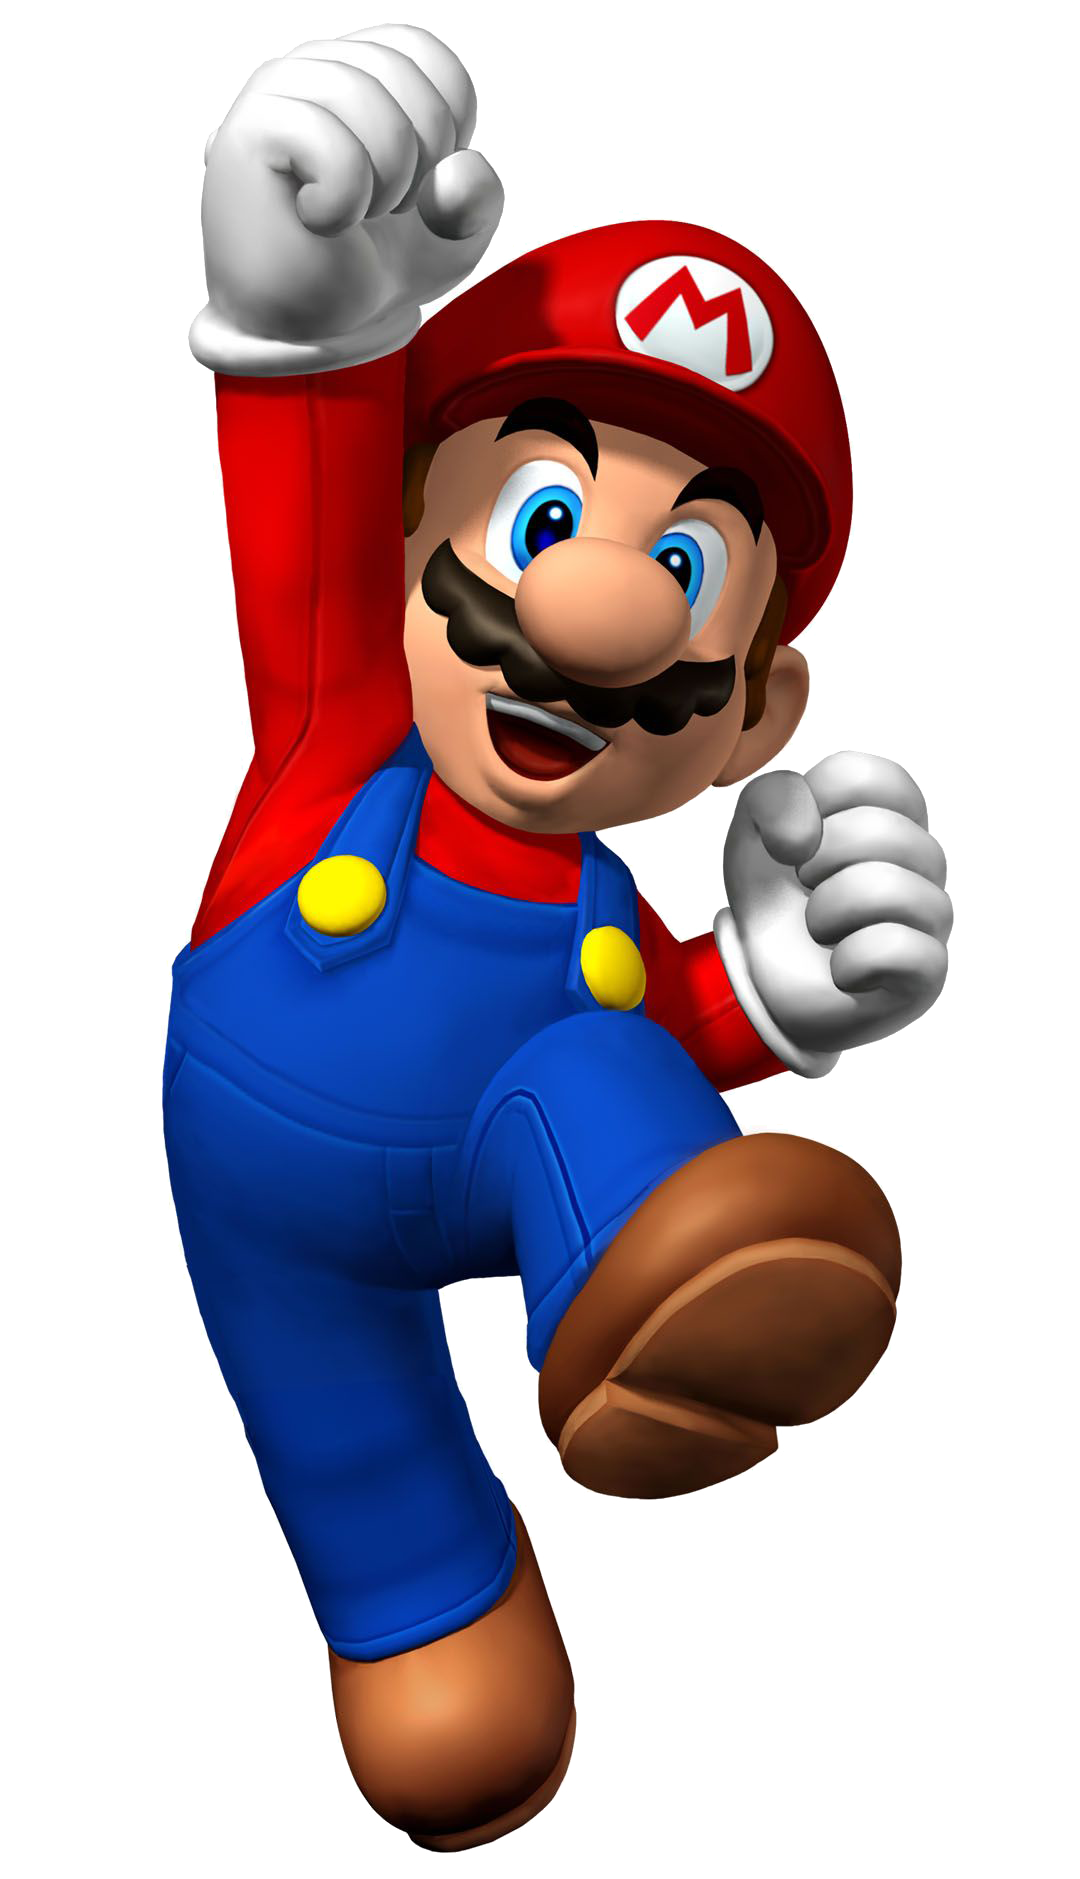 Mario Pic Super Bros Free HQ Image PNG Image